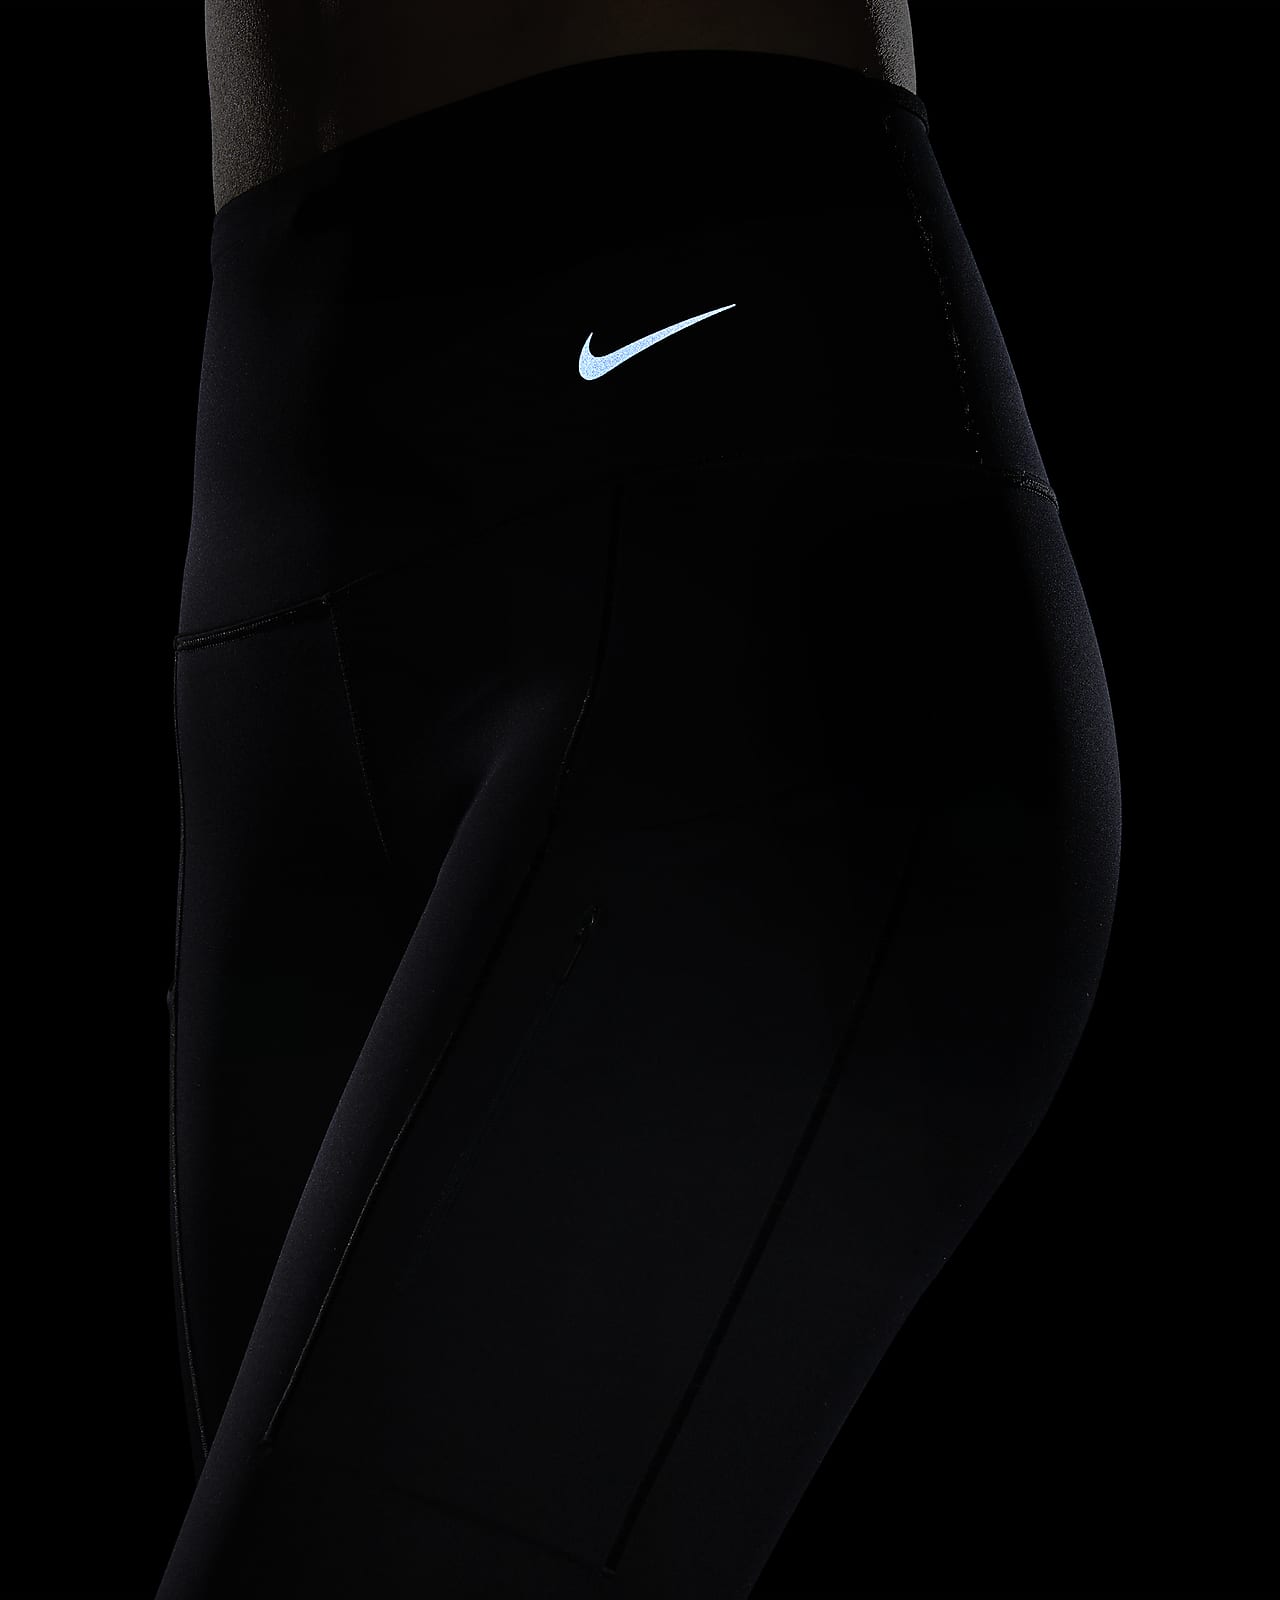 Nike Women's Femme High Rise Black/Metallic Gold Leggings (CZ9282